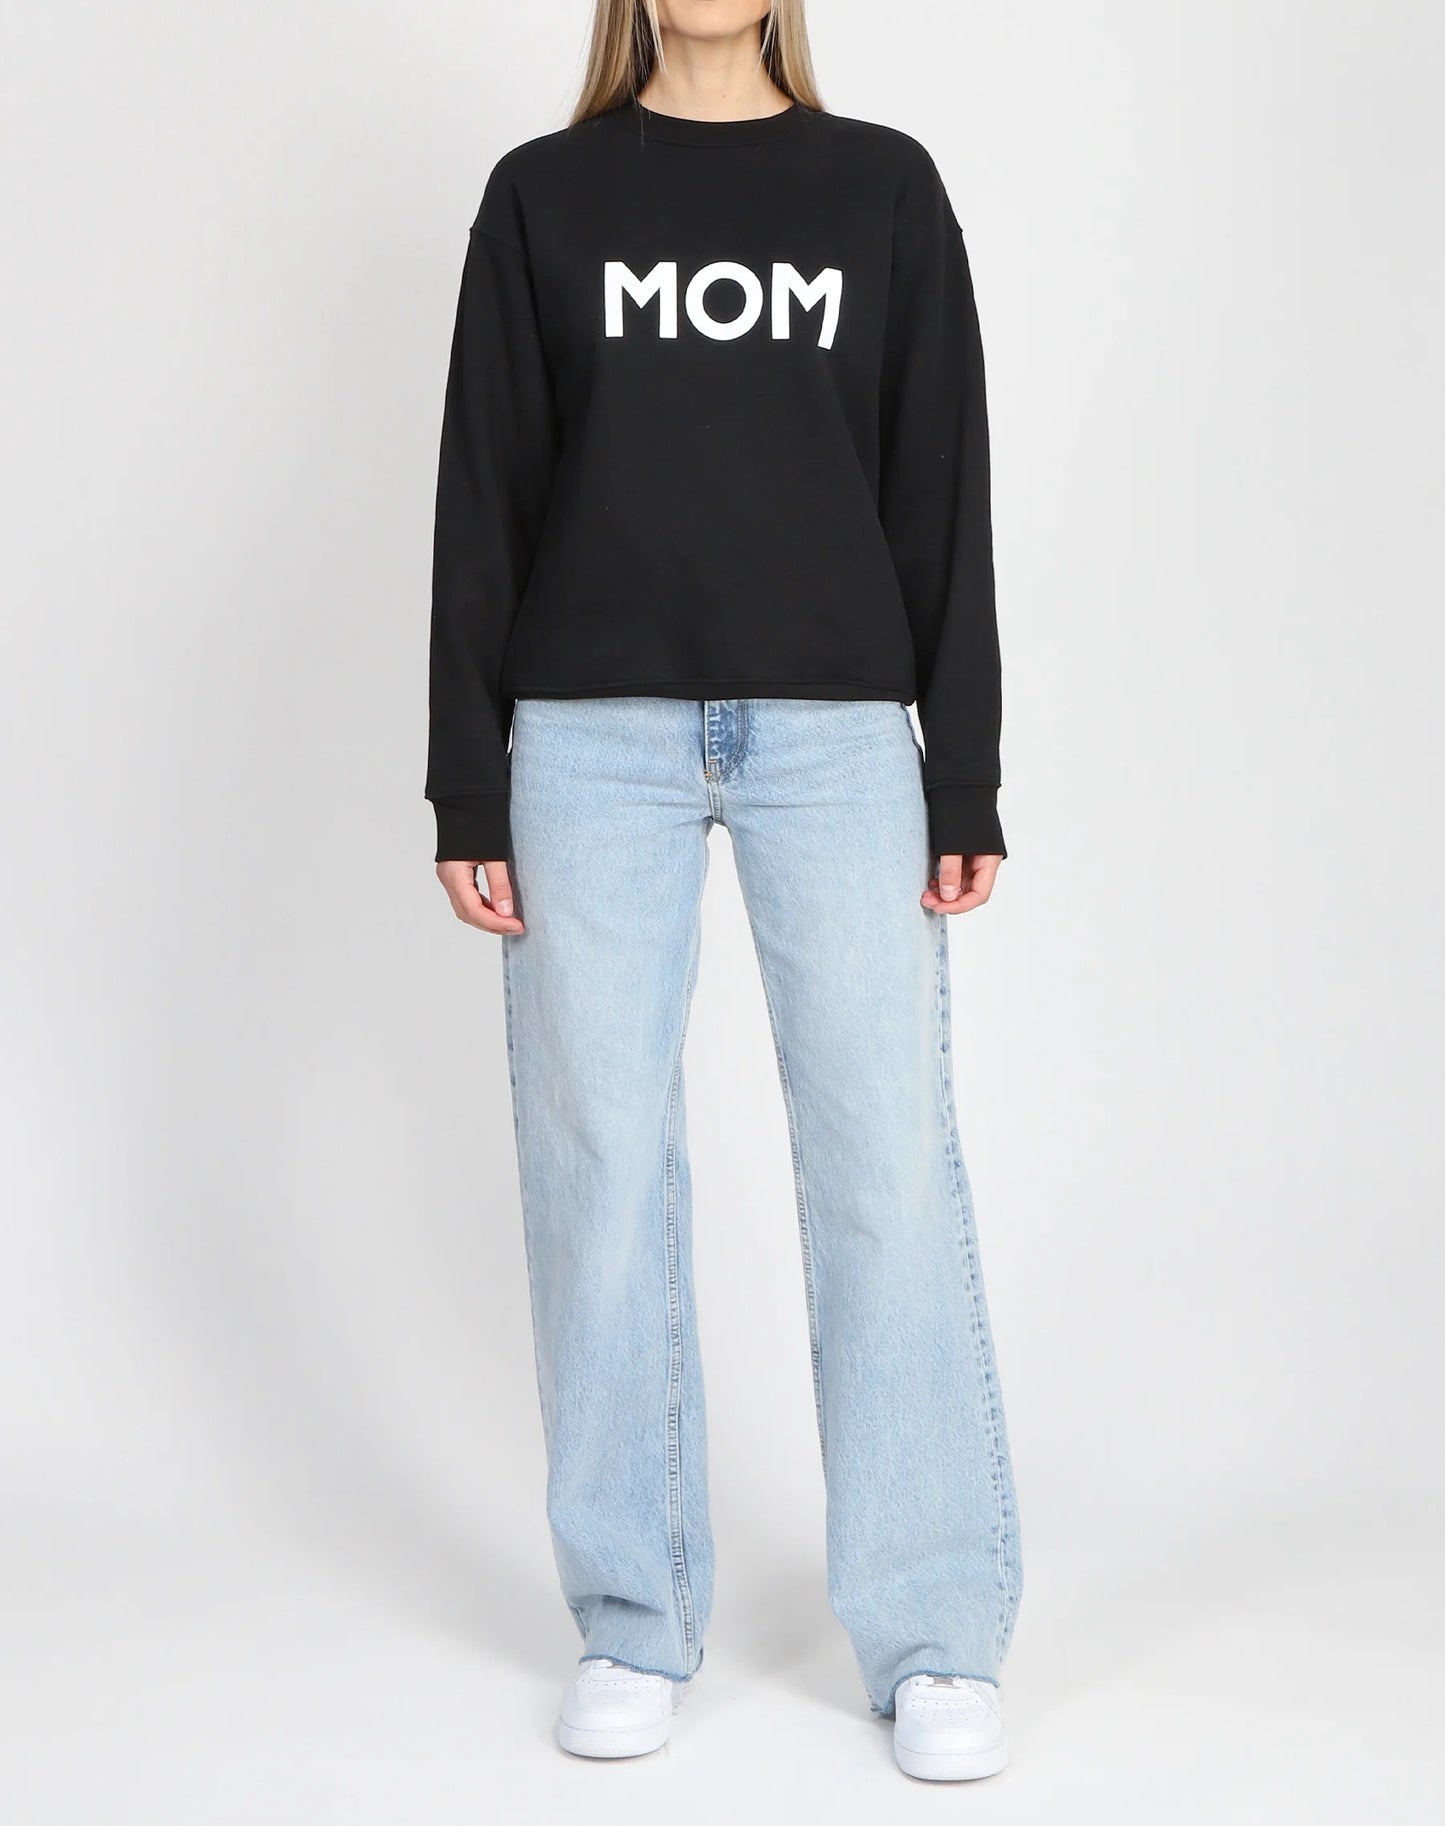 The "MOM" Classic Crew Neck Sweatshirt | Sage or Black Brunette The Label